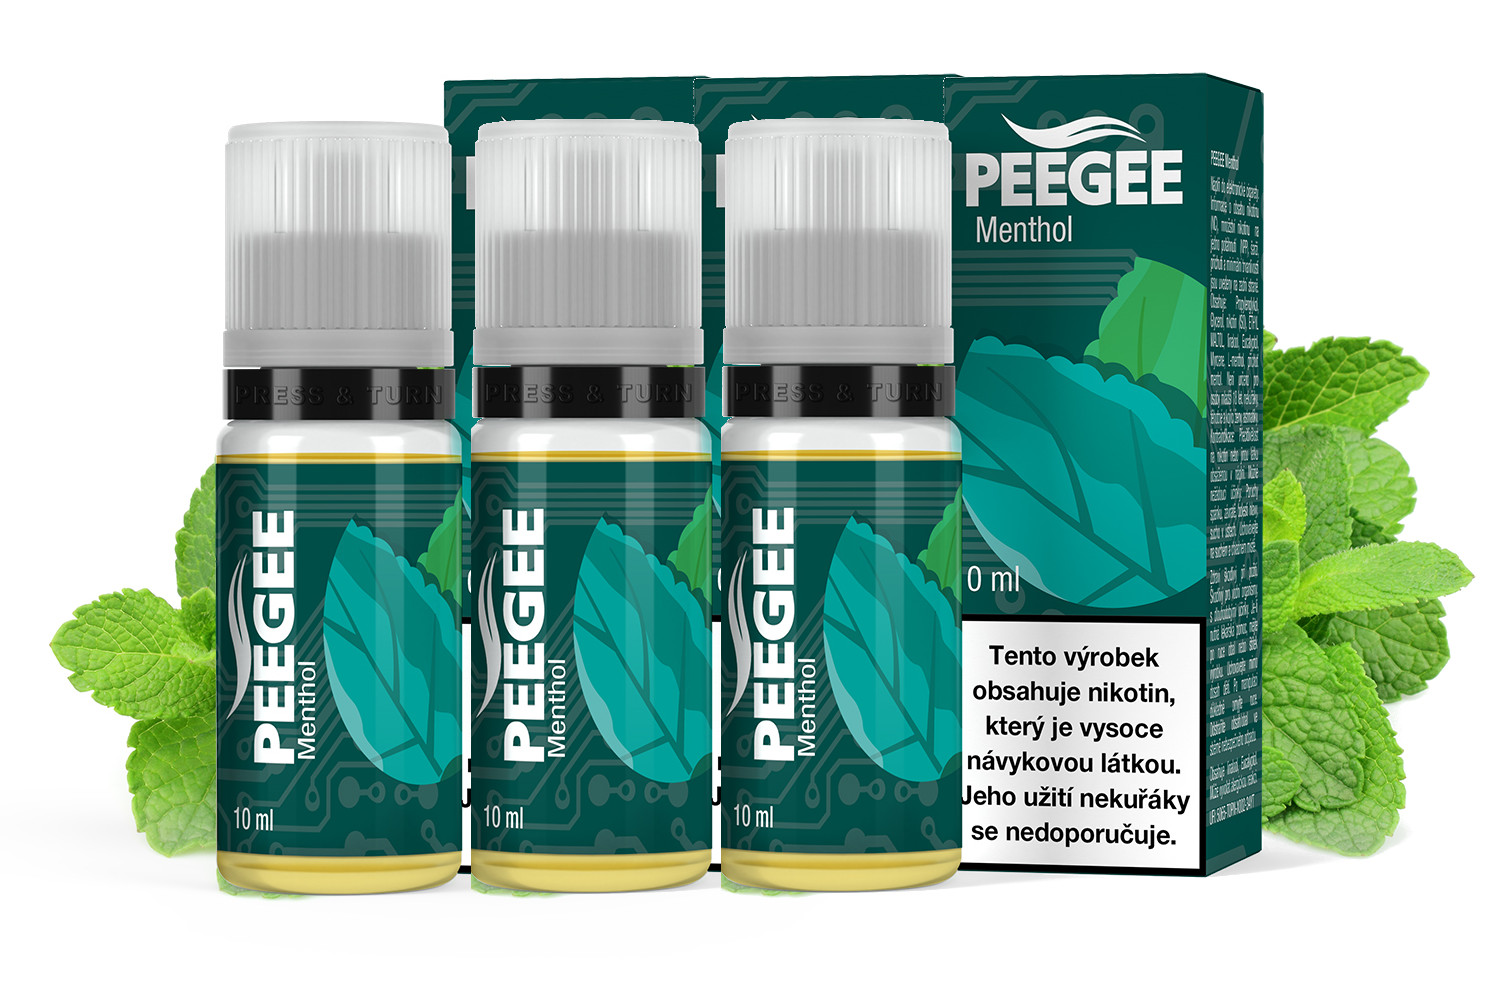 PEEGEE - Mentol (Menthol) 3x10ml Obsah nikotinu: 6mg